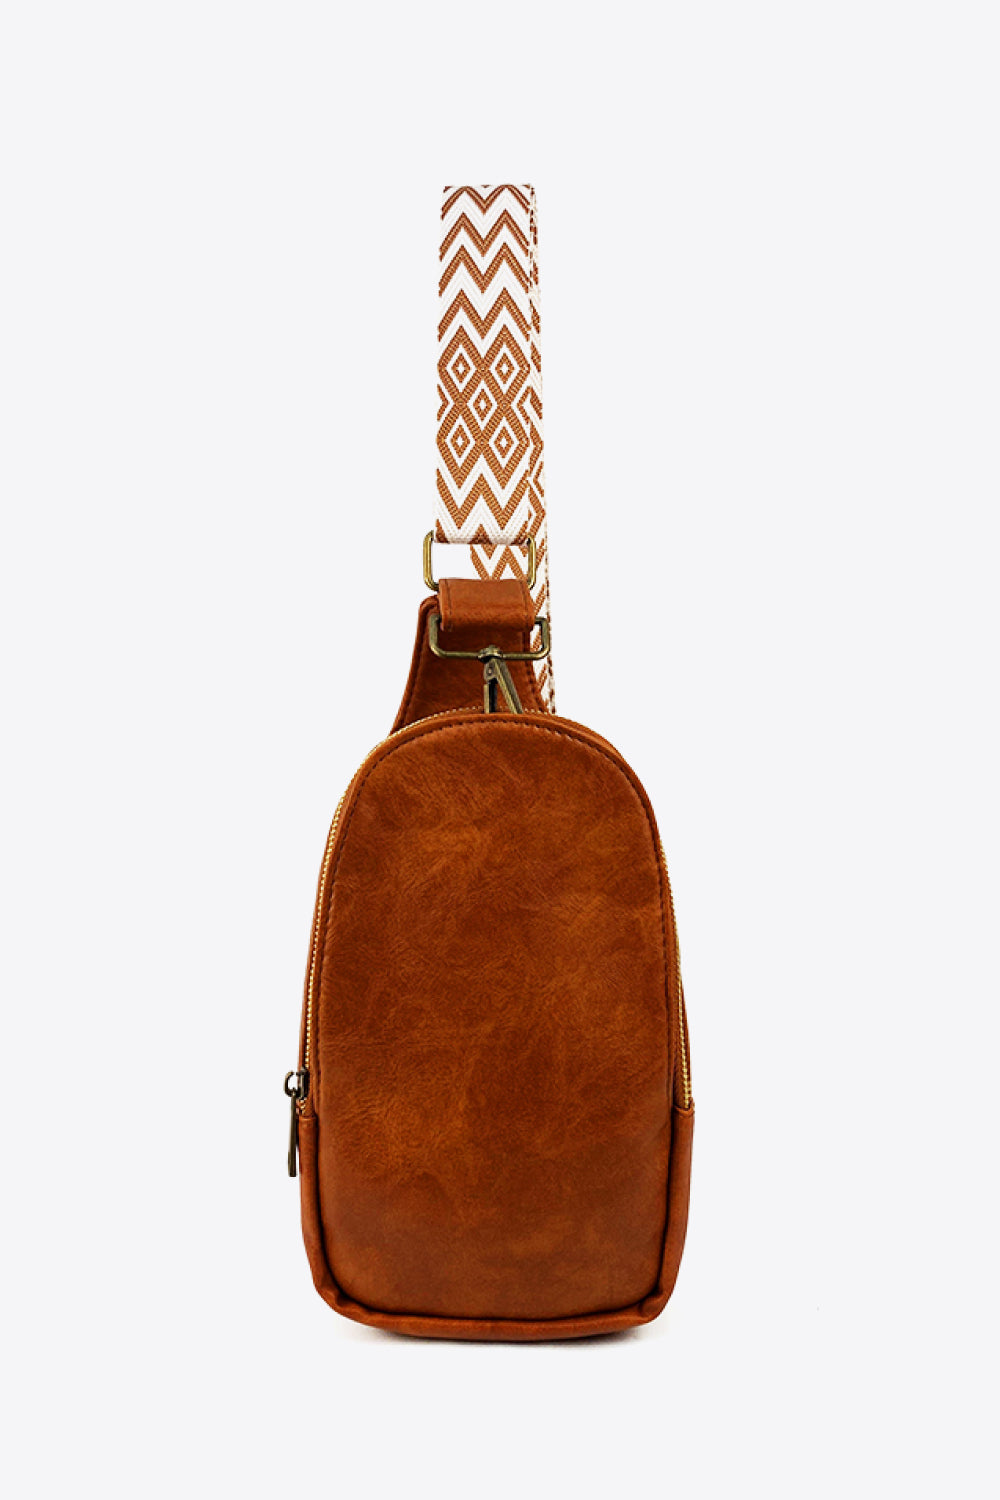 Adjustable Strap PU Leather Sling Bag - Tigbul's Fashion